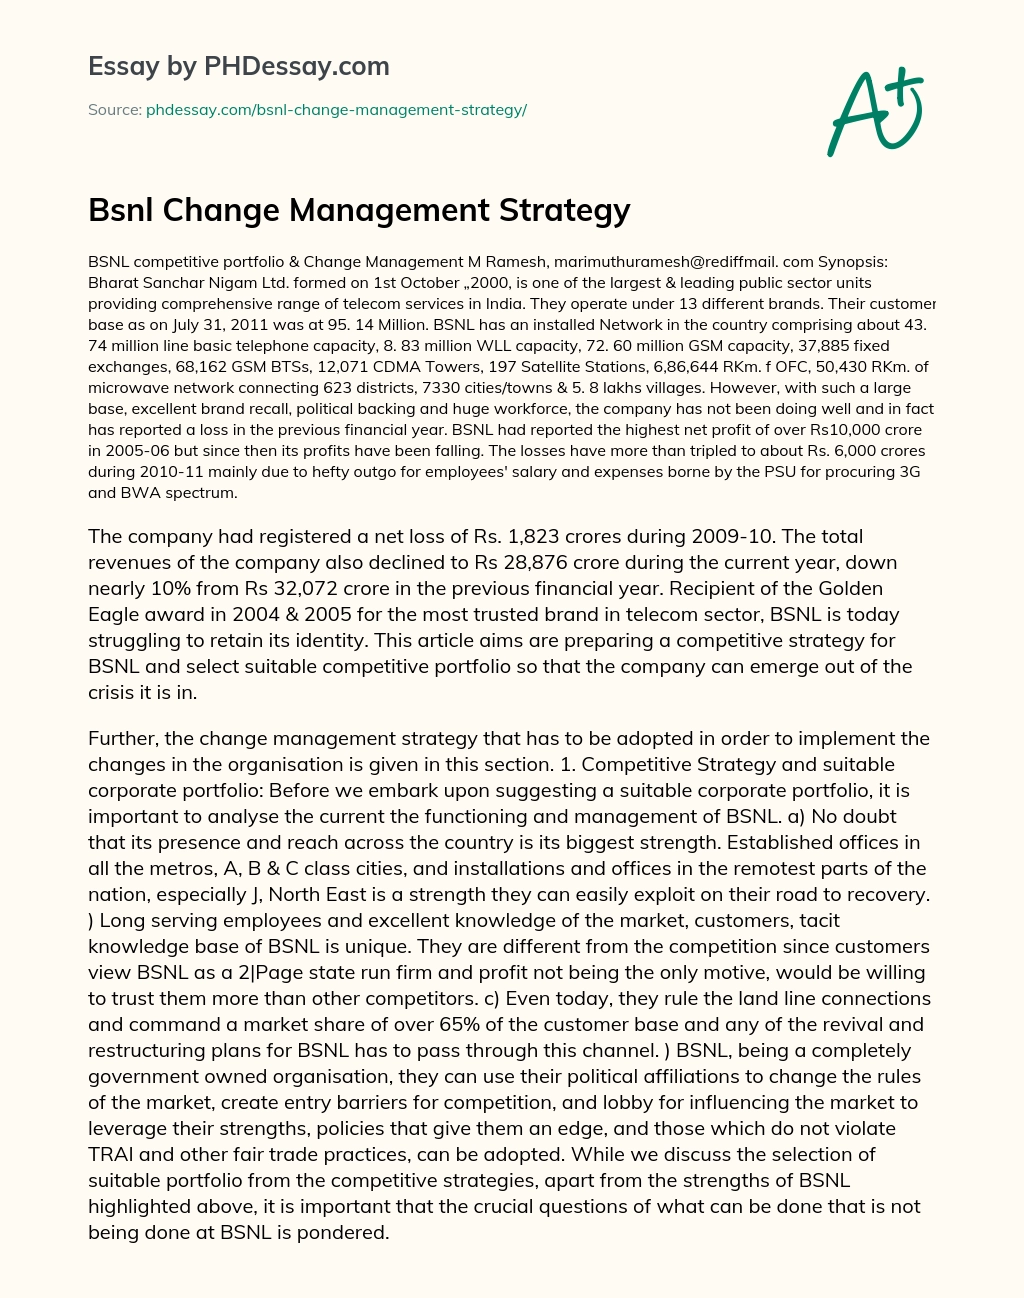 Bsnl Change Management Strategy essay